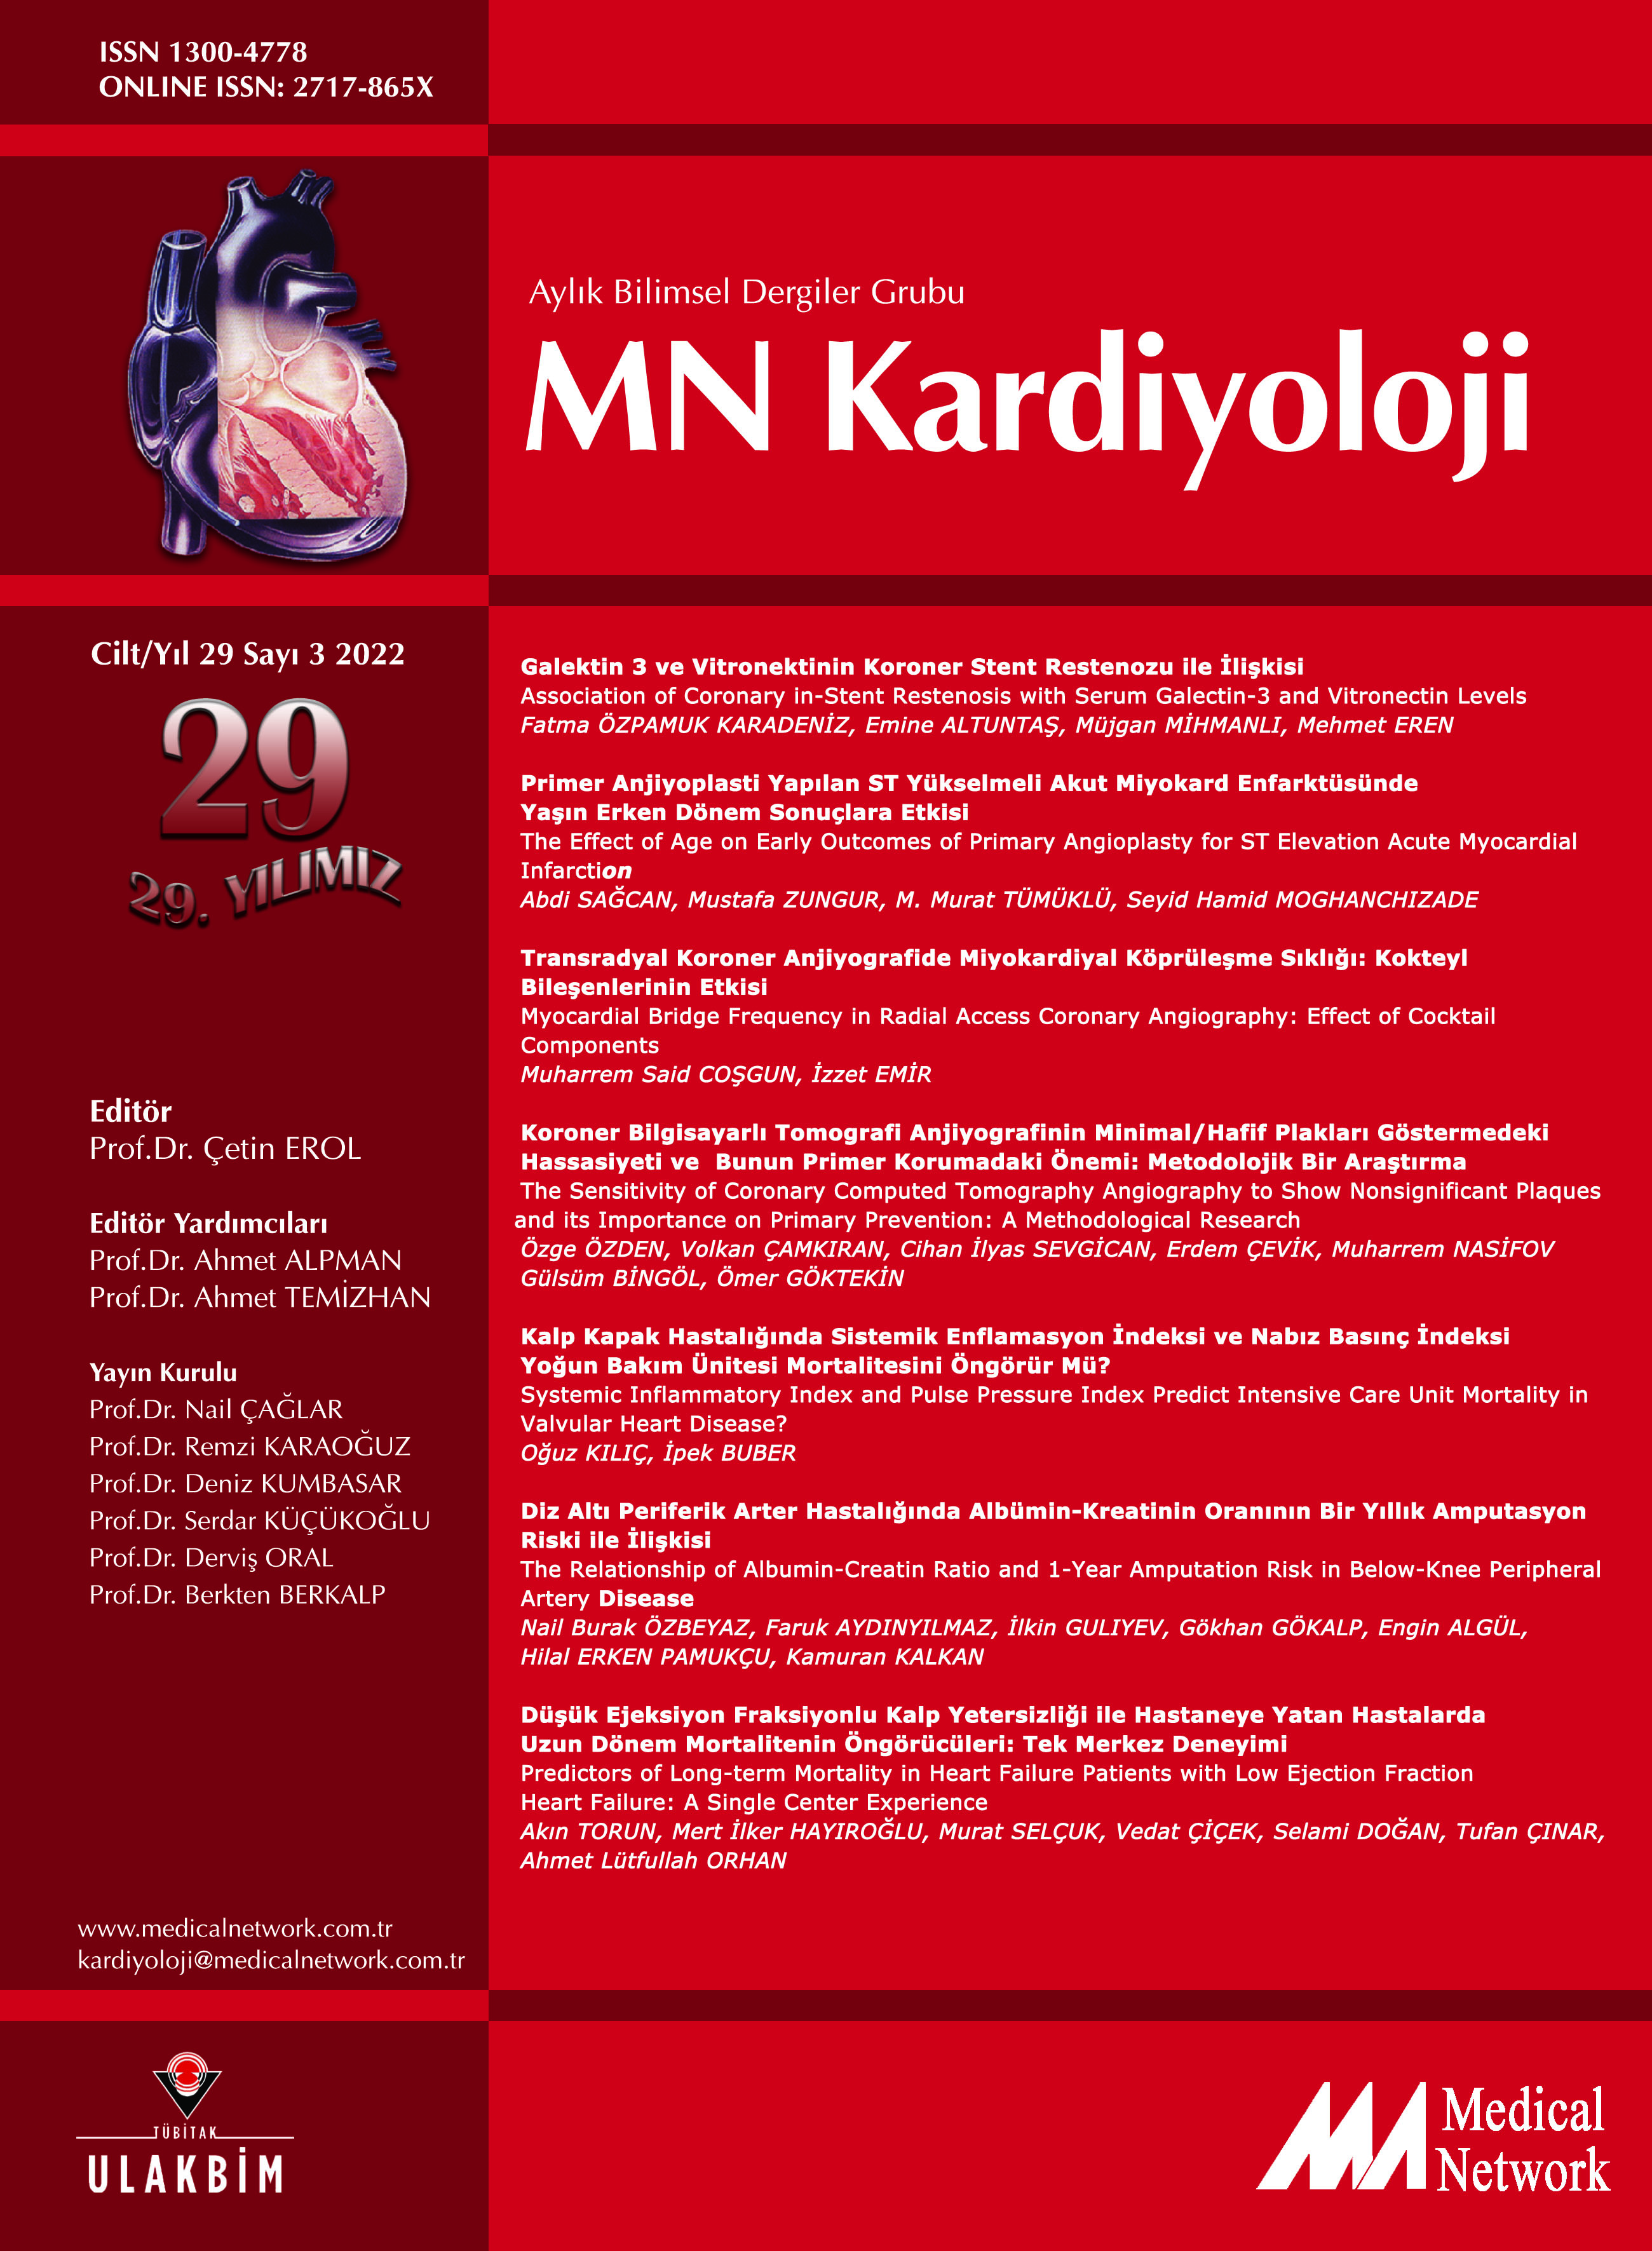 <p>MN Kardiyoloji Cilt: 29 Say: 3 2022 MN Cardiology Volume: 29 No: 3 2022</p>